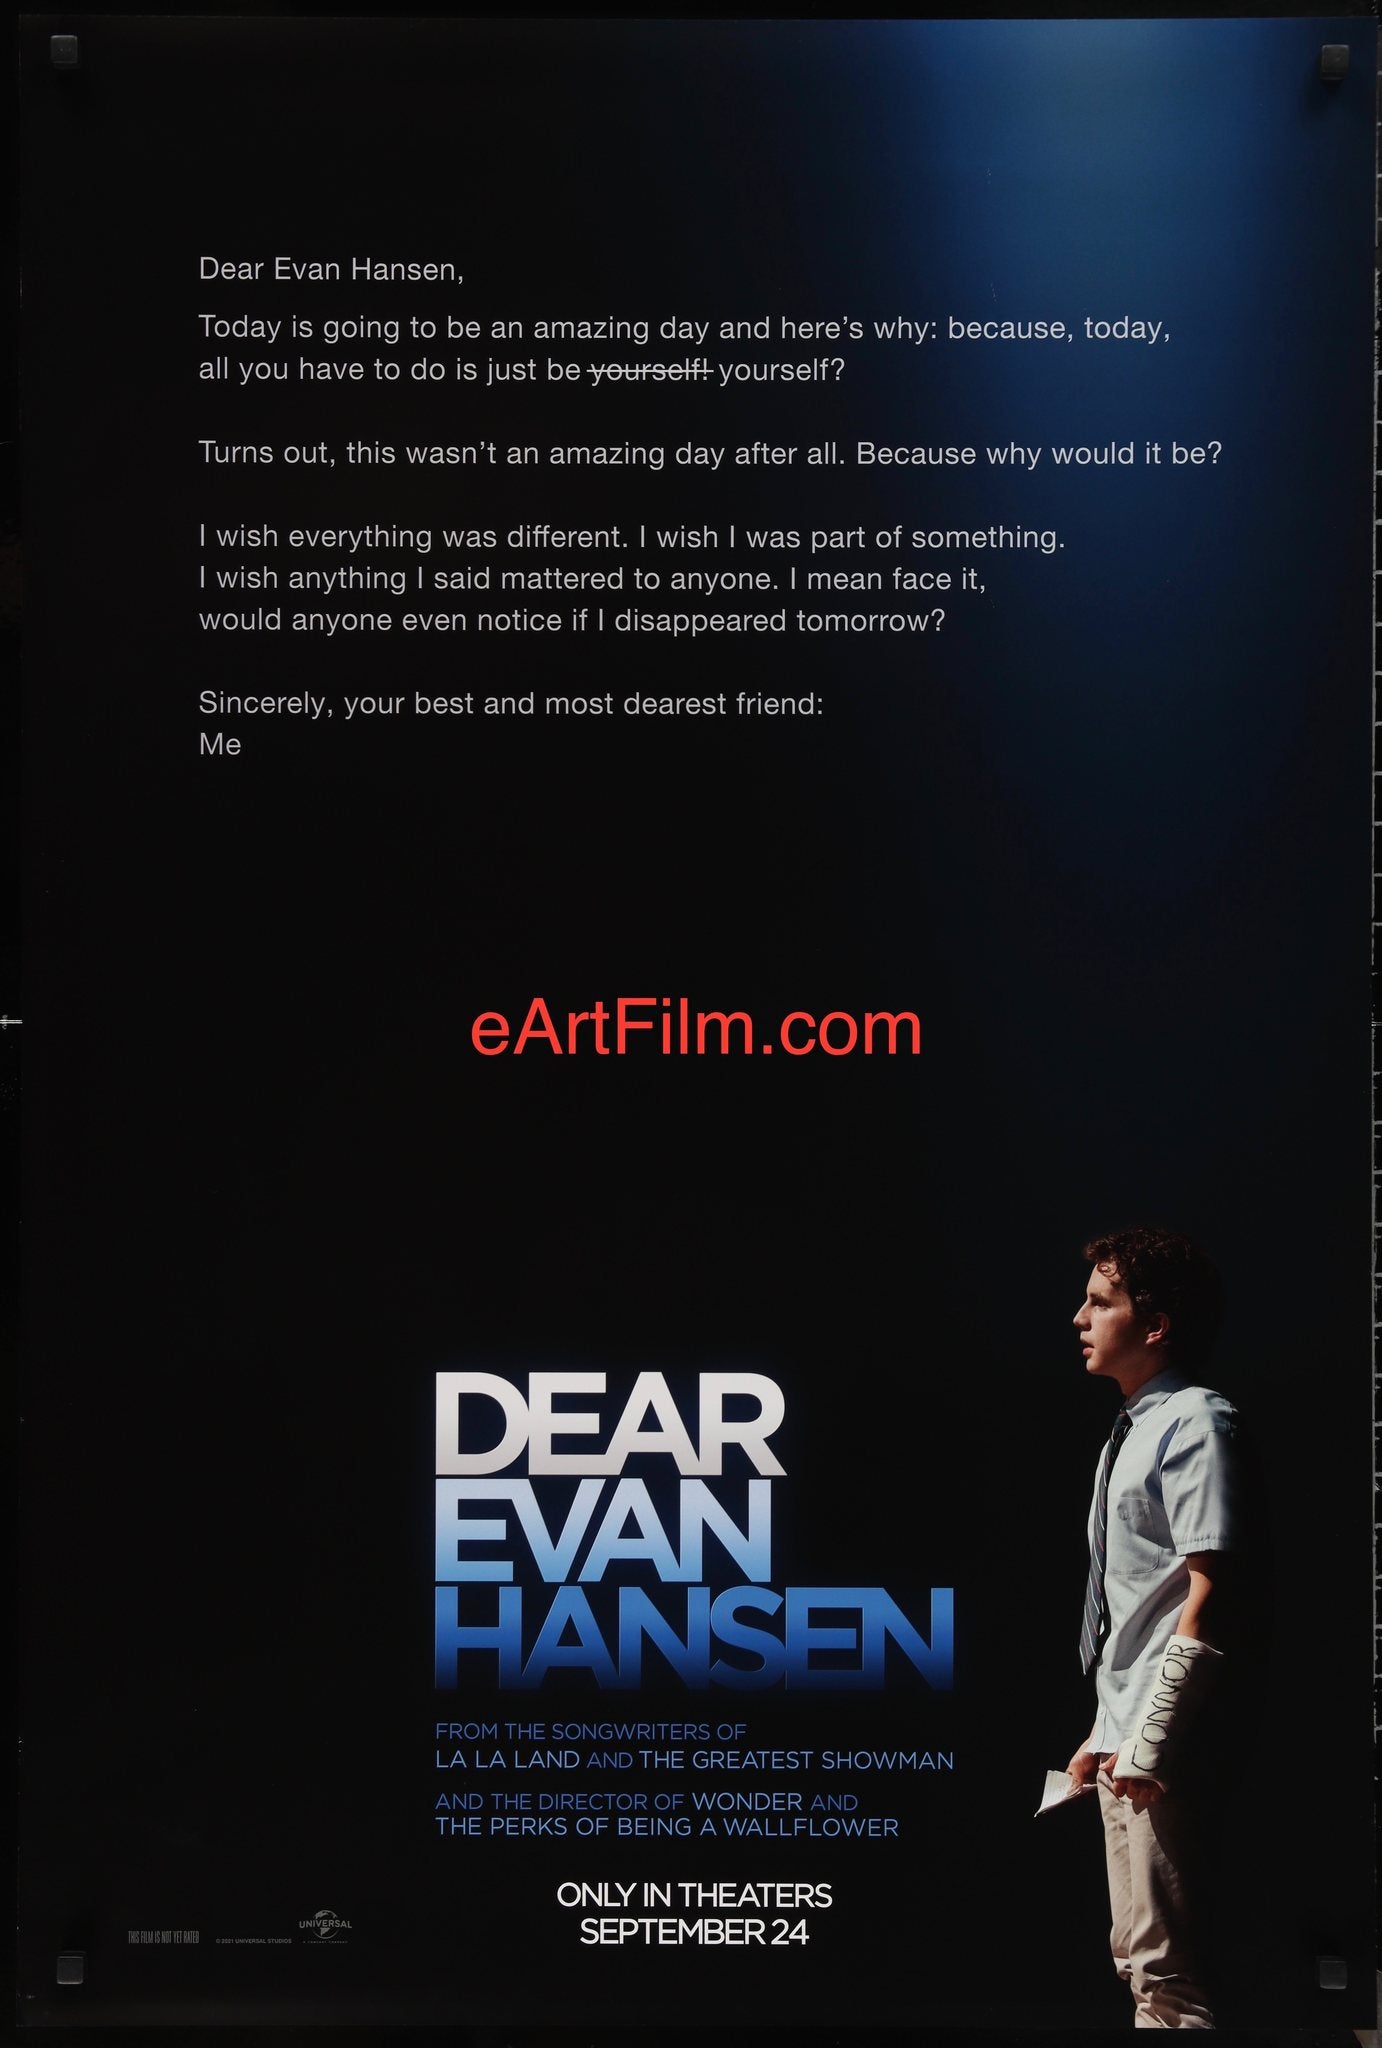 Dear Evan Hansen 2021 27x40 Ben Platt Stephen Chbosky Broadway musical drama eArtFilm movie posters